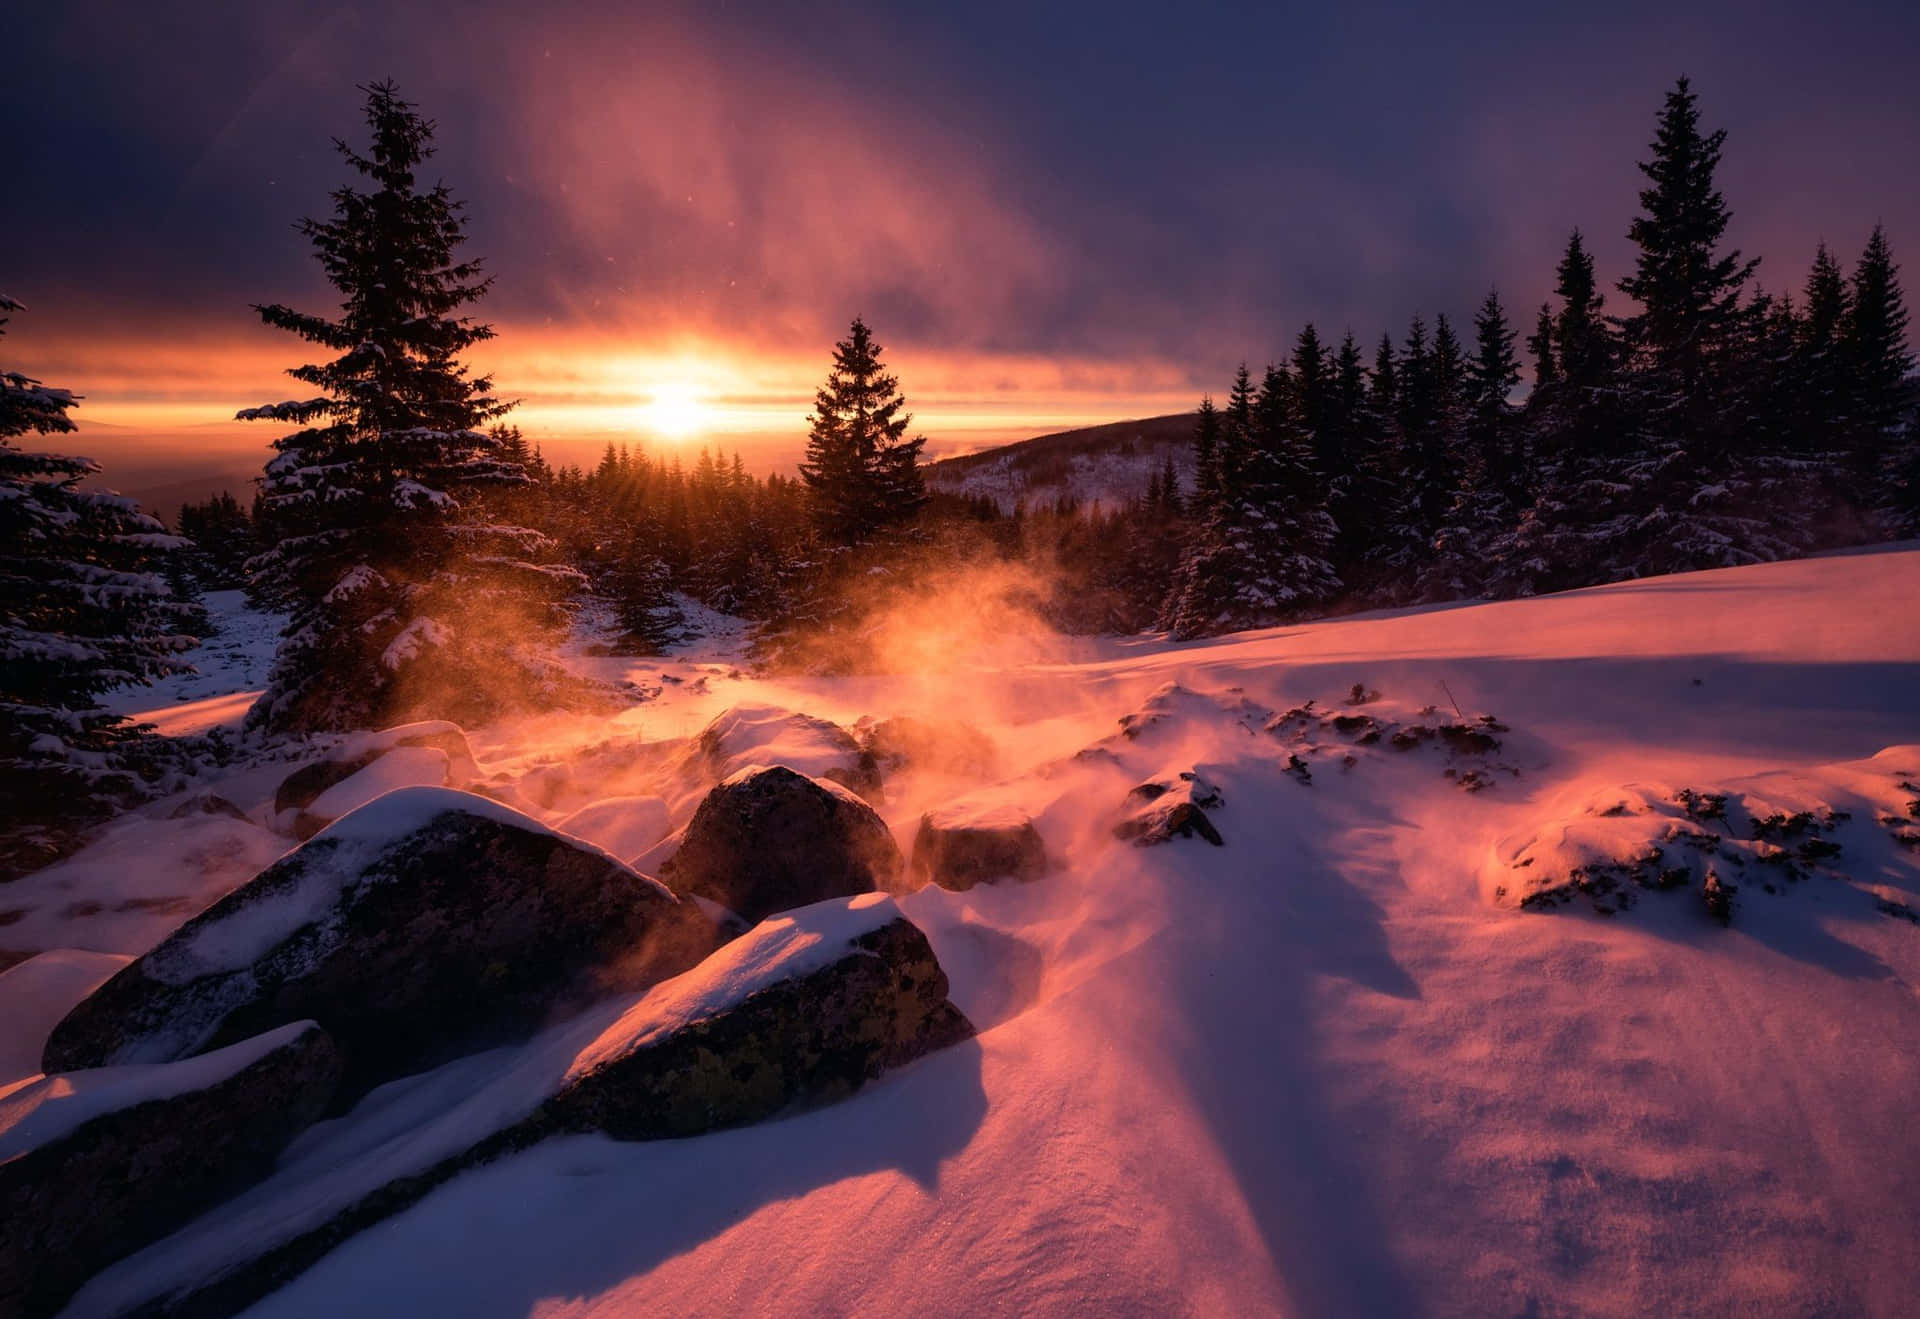 Winter Sun illuminates a snowy landscape Wallpaper